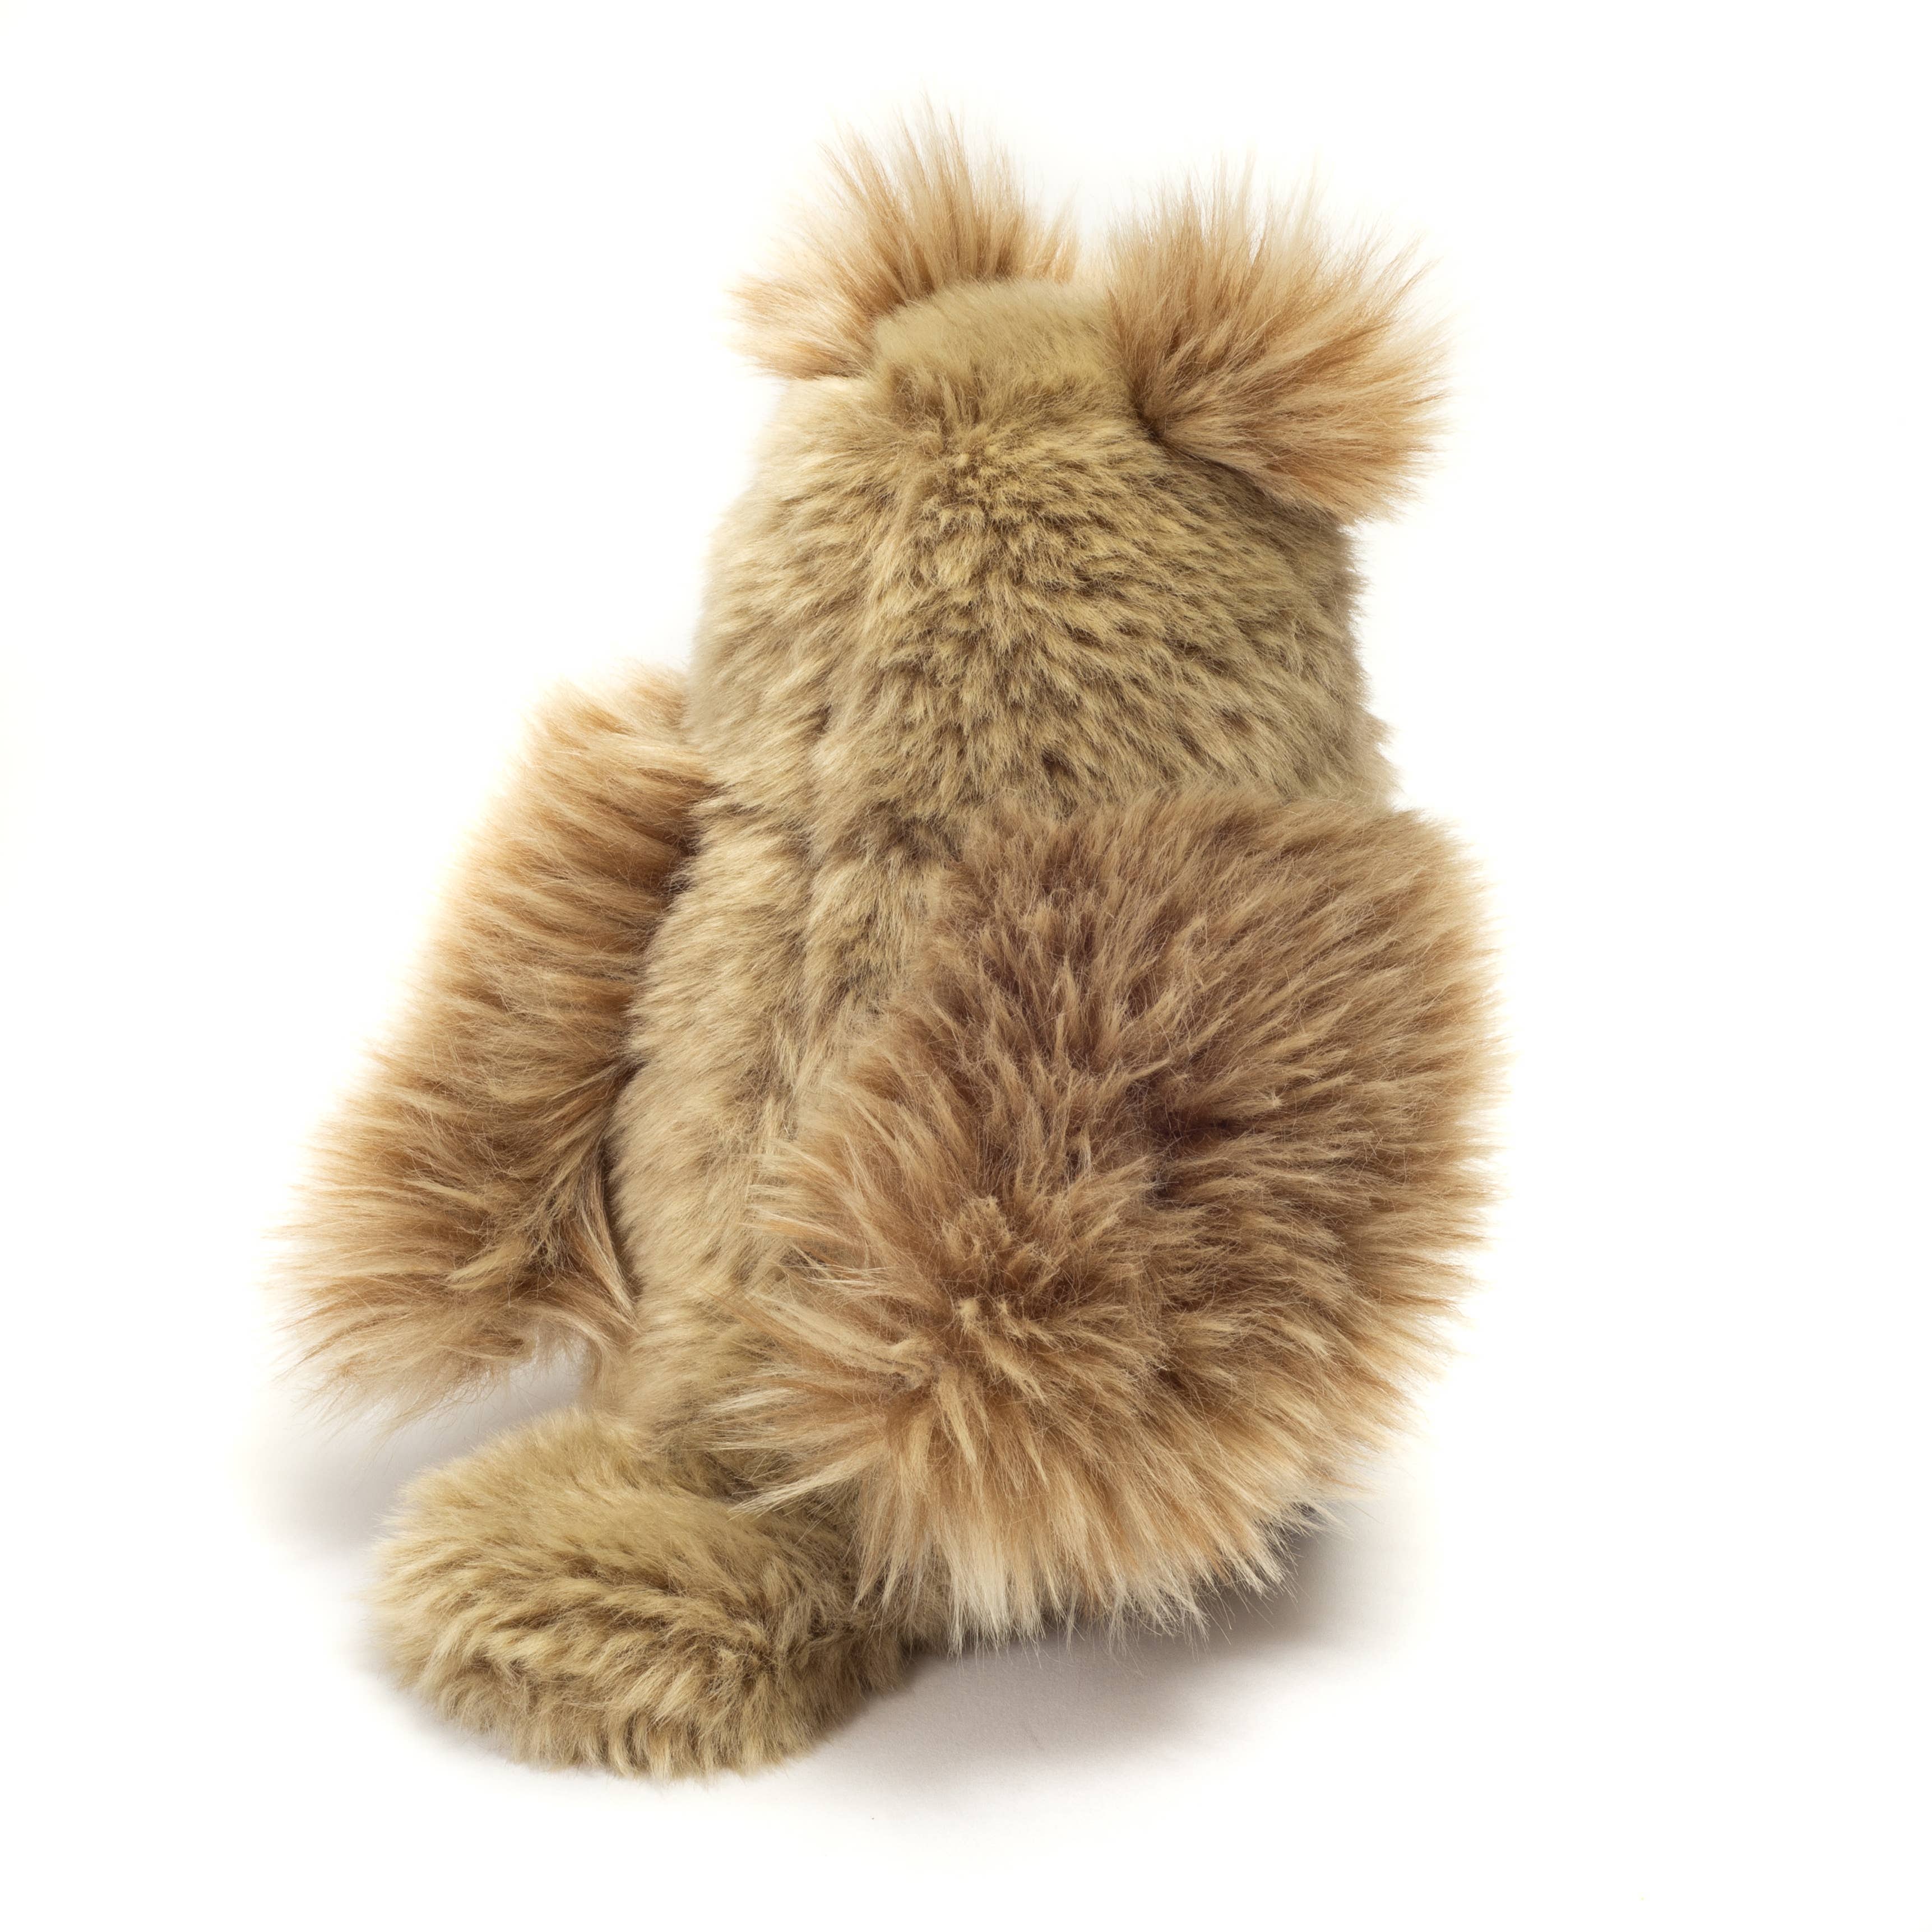 Plush Horned Owl 17 cm plush toy by Teddy Hermann-SO CUTE!